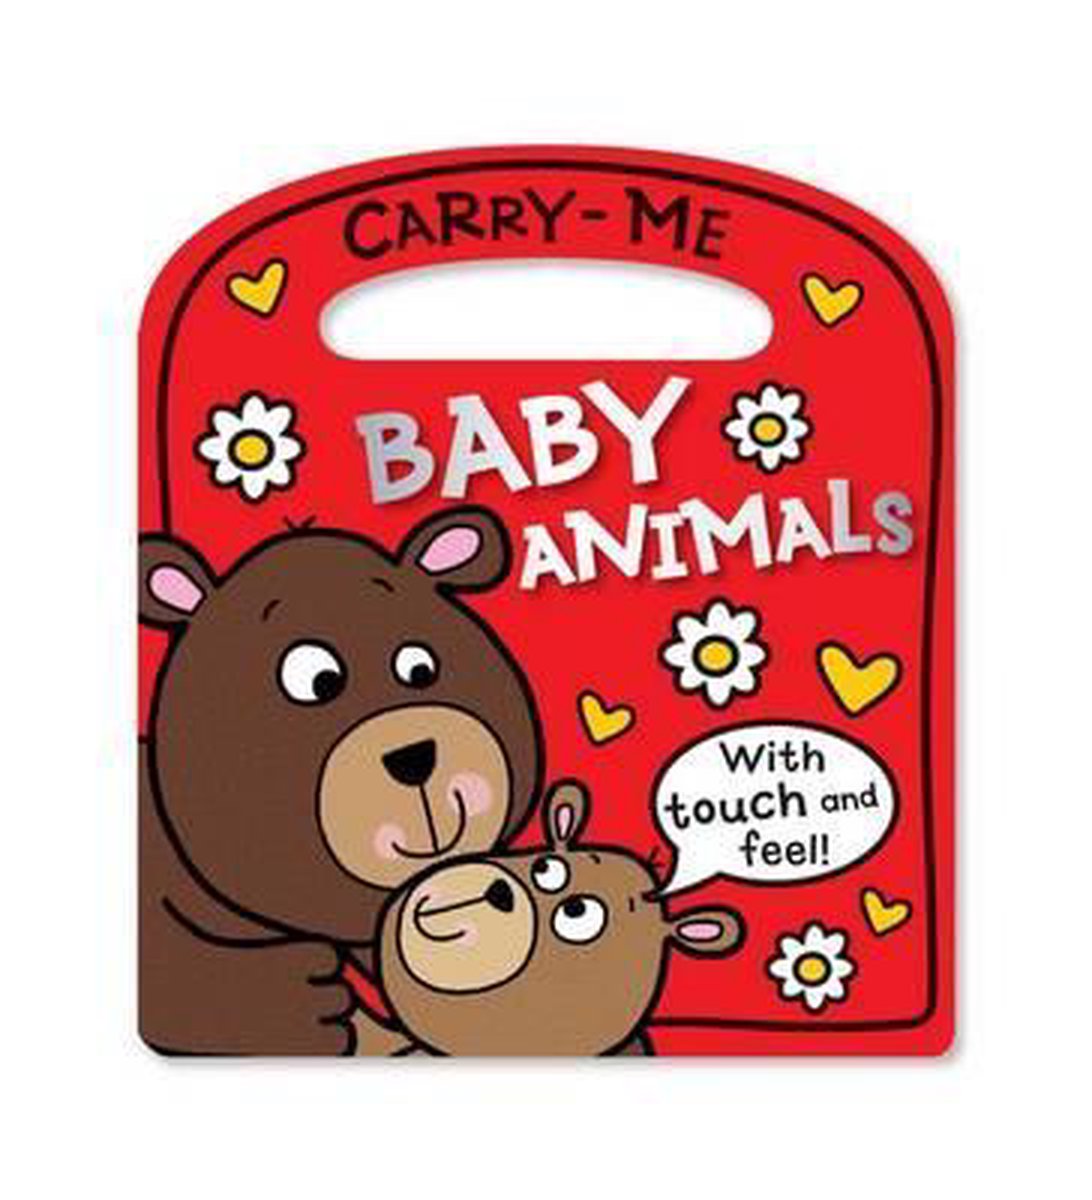 Carry-me Baby Animals